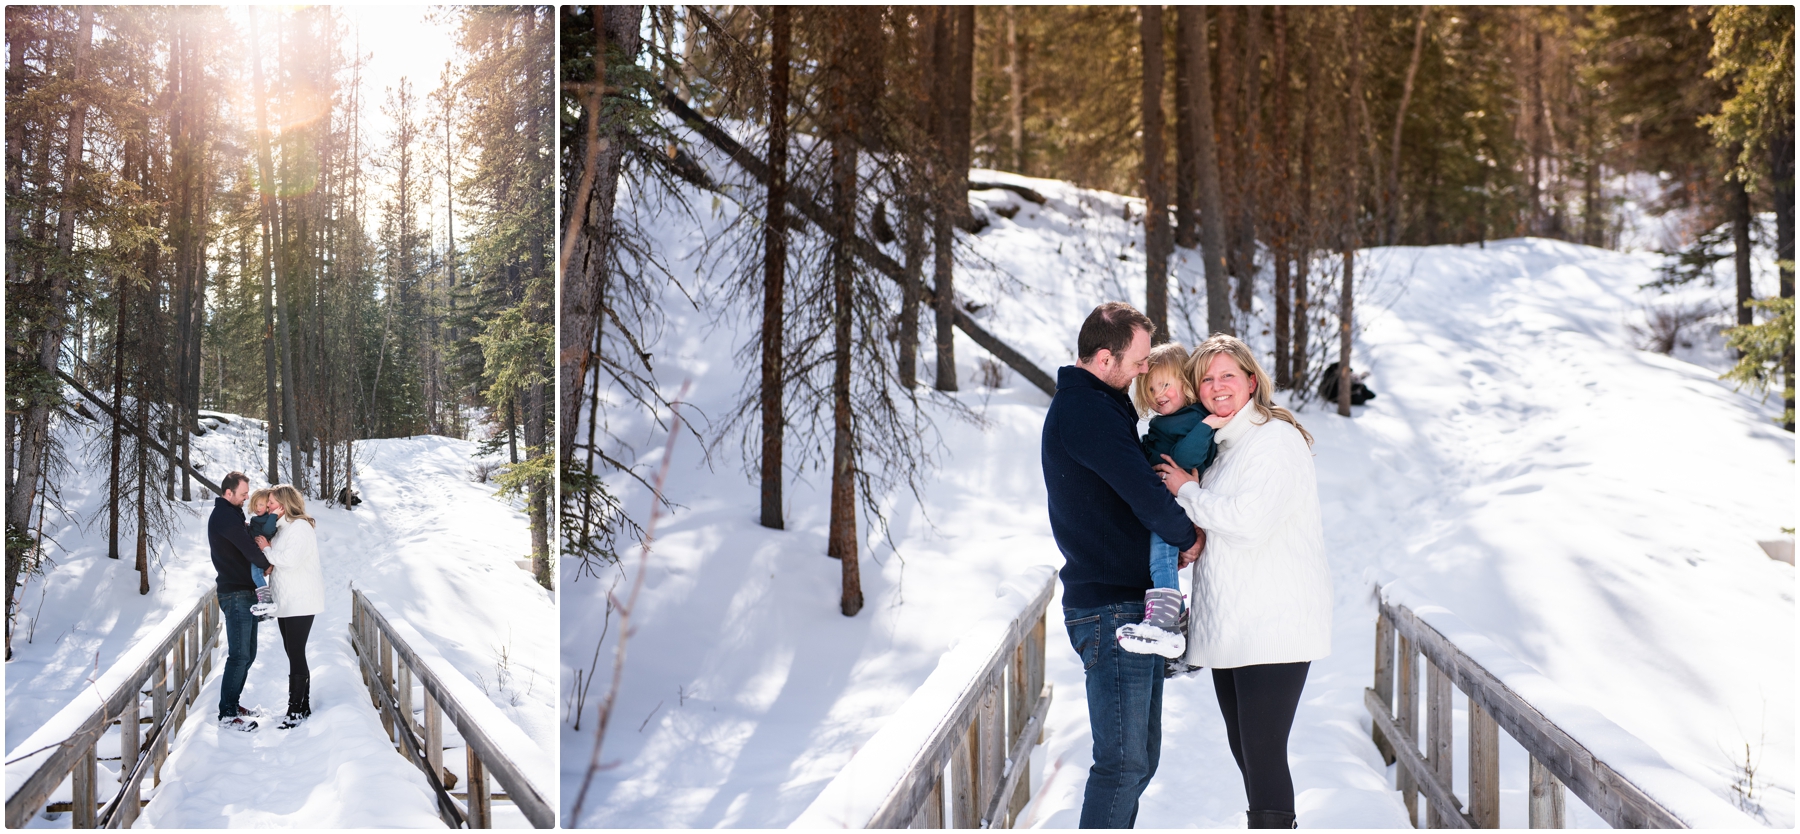 Winter Forest Family Photos Calgary